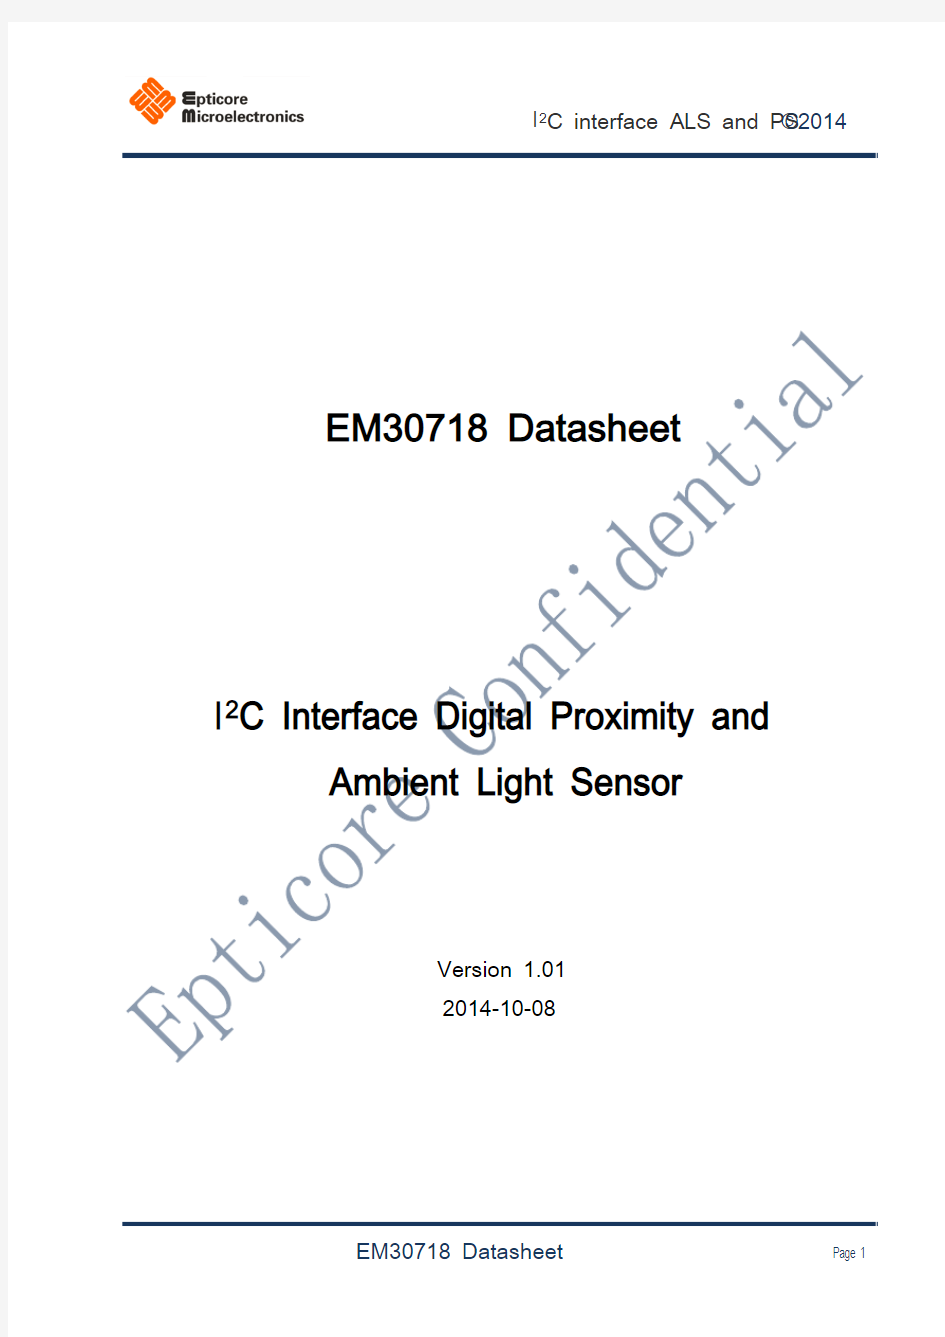 EM30718 Datasheet 2014Oct